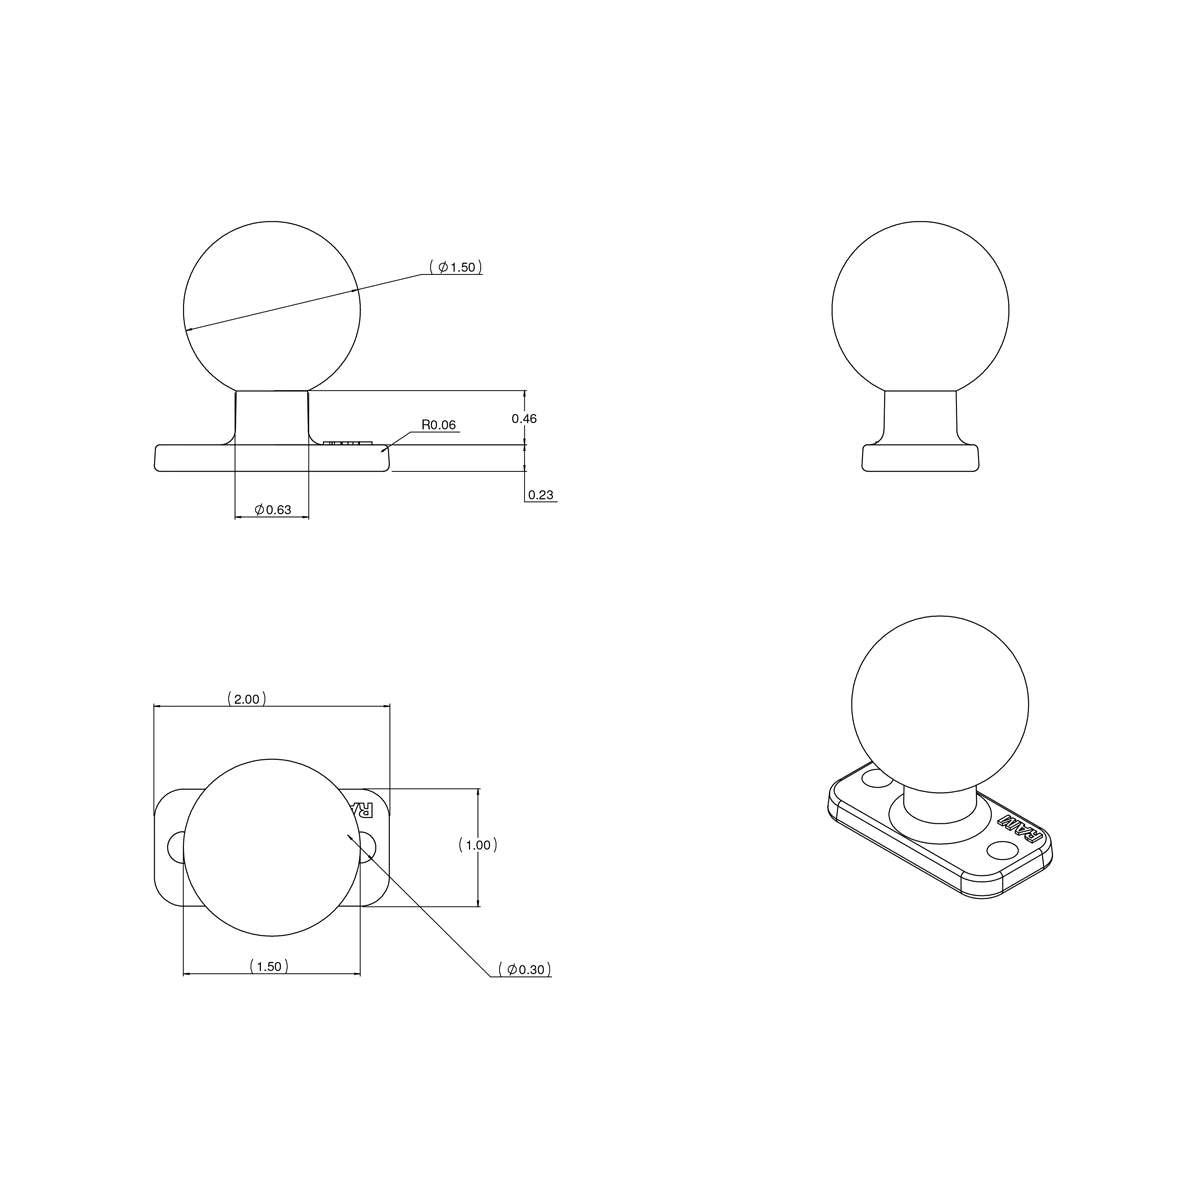 RAM C Size 1.5" Ball on Rectangular Plate with 1.5" 2-Hole Pattern (RAM-202U-12)